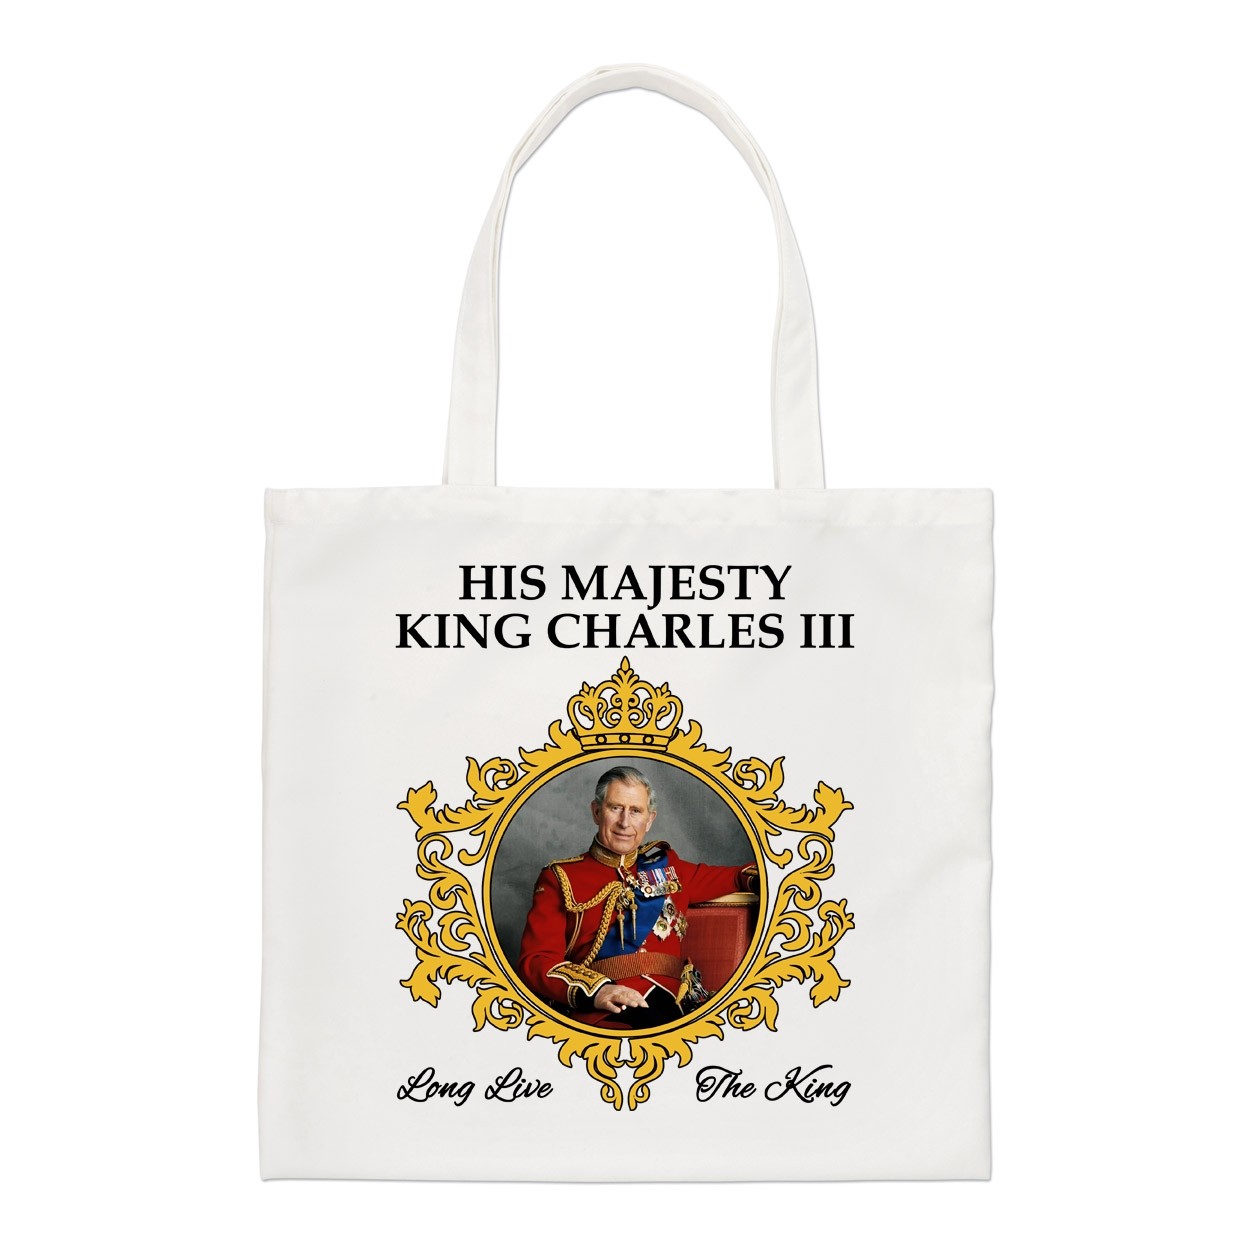 King Charles III 2022 Regular Tote Bag Commemorative Gift His Majesty